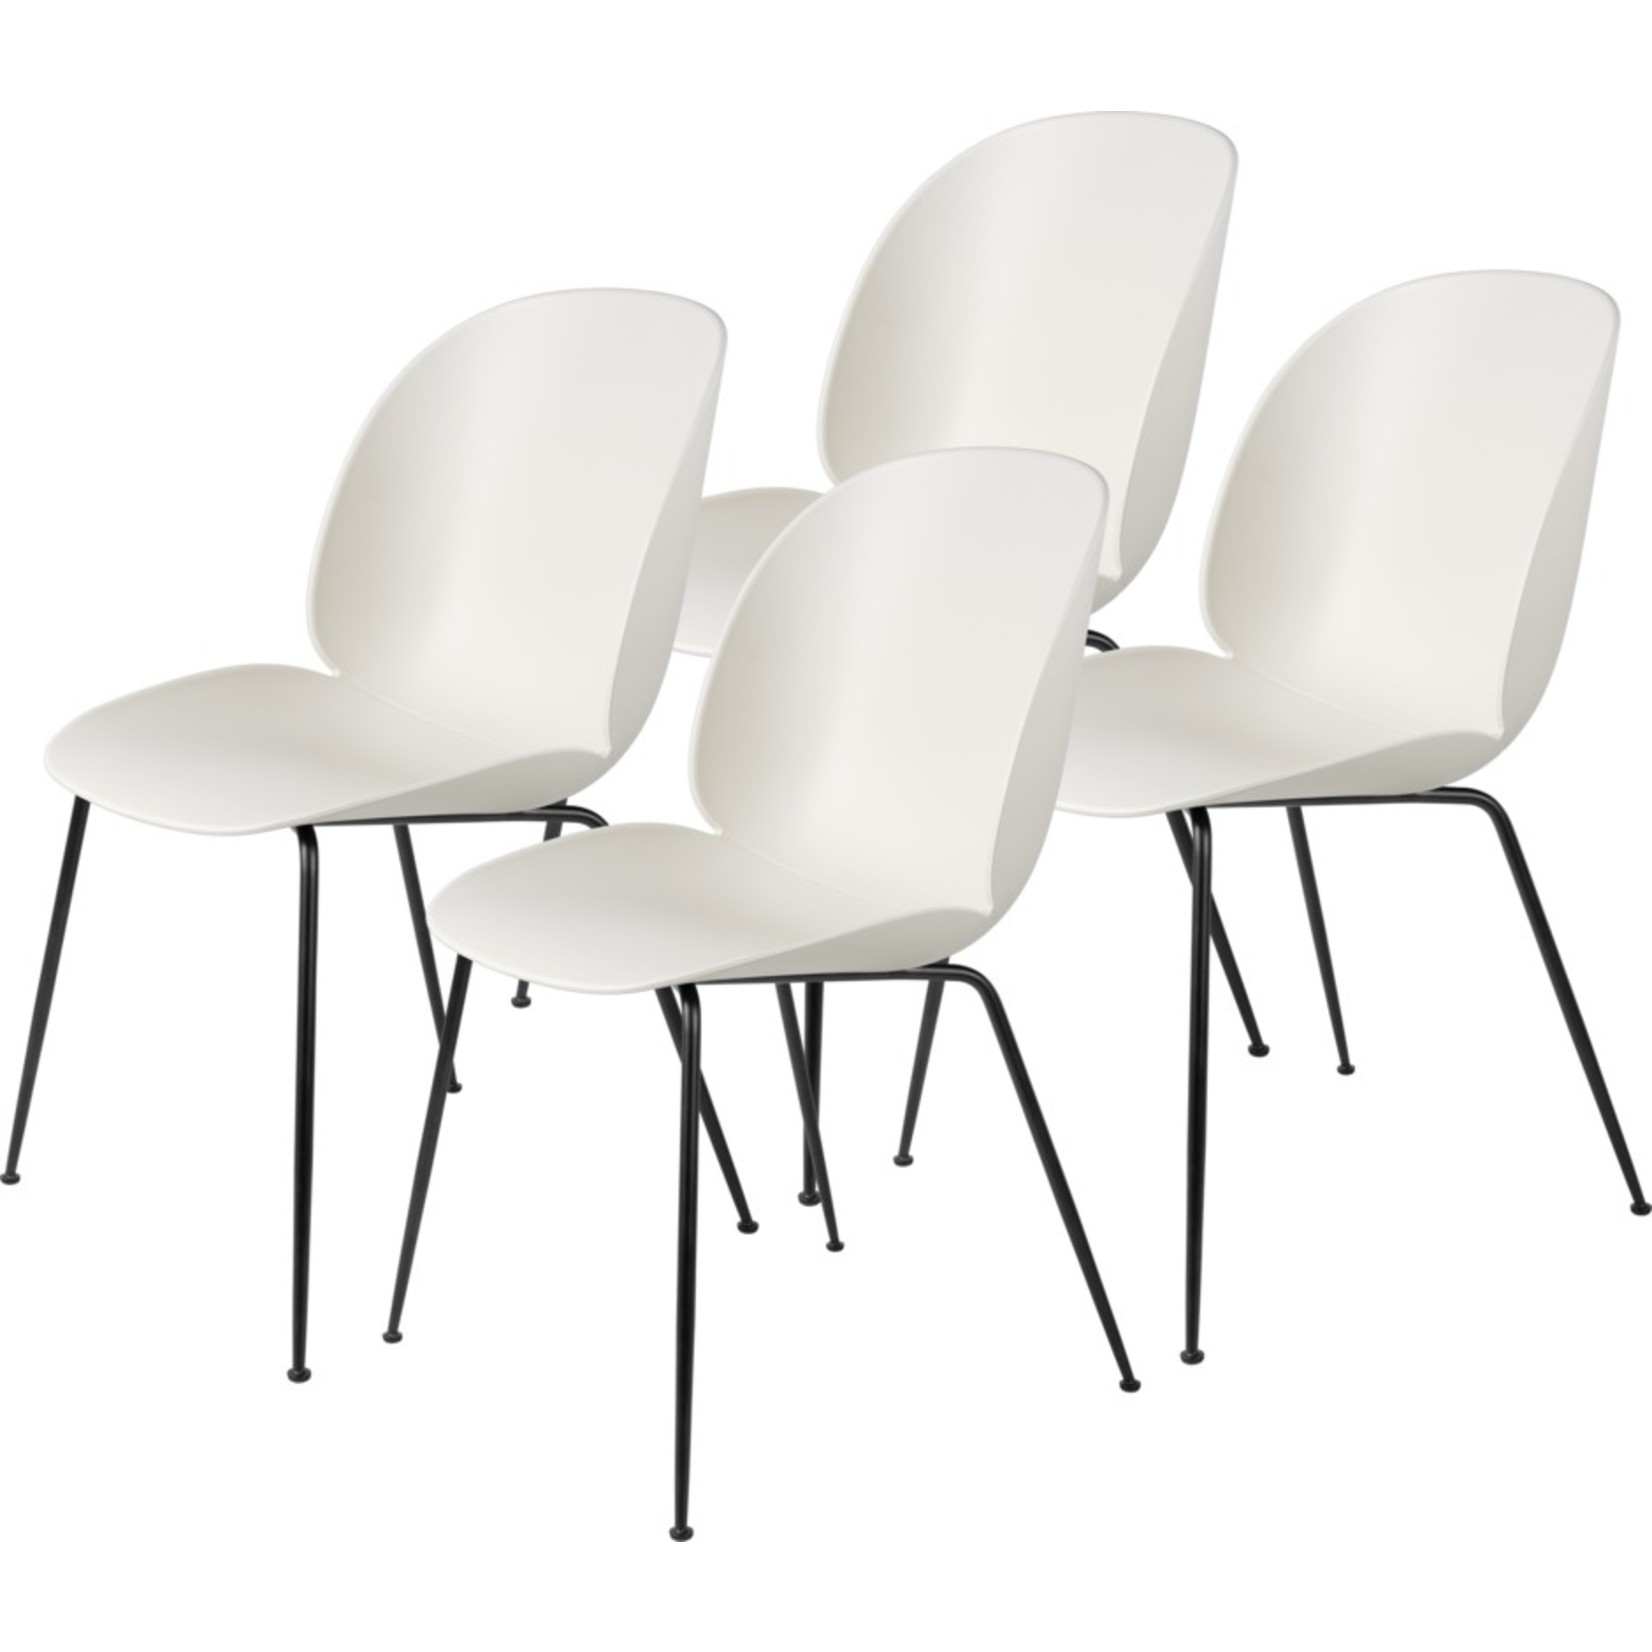 Gubi Beetle Dining Chair | Un-Upholstered Alabaster White & Black Matt Base, Set van 4